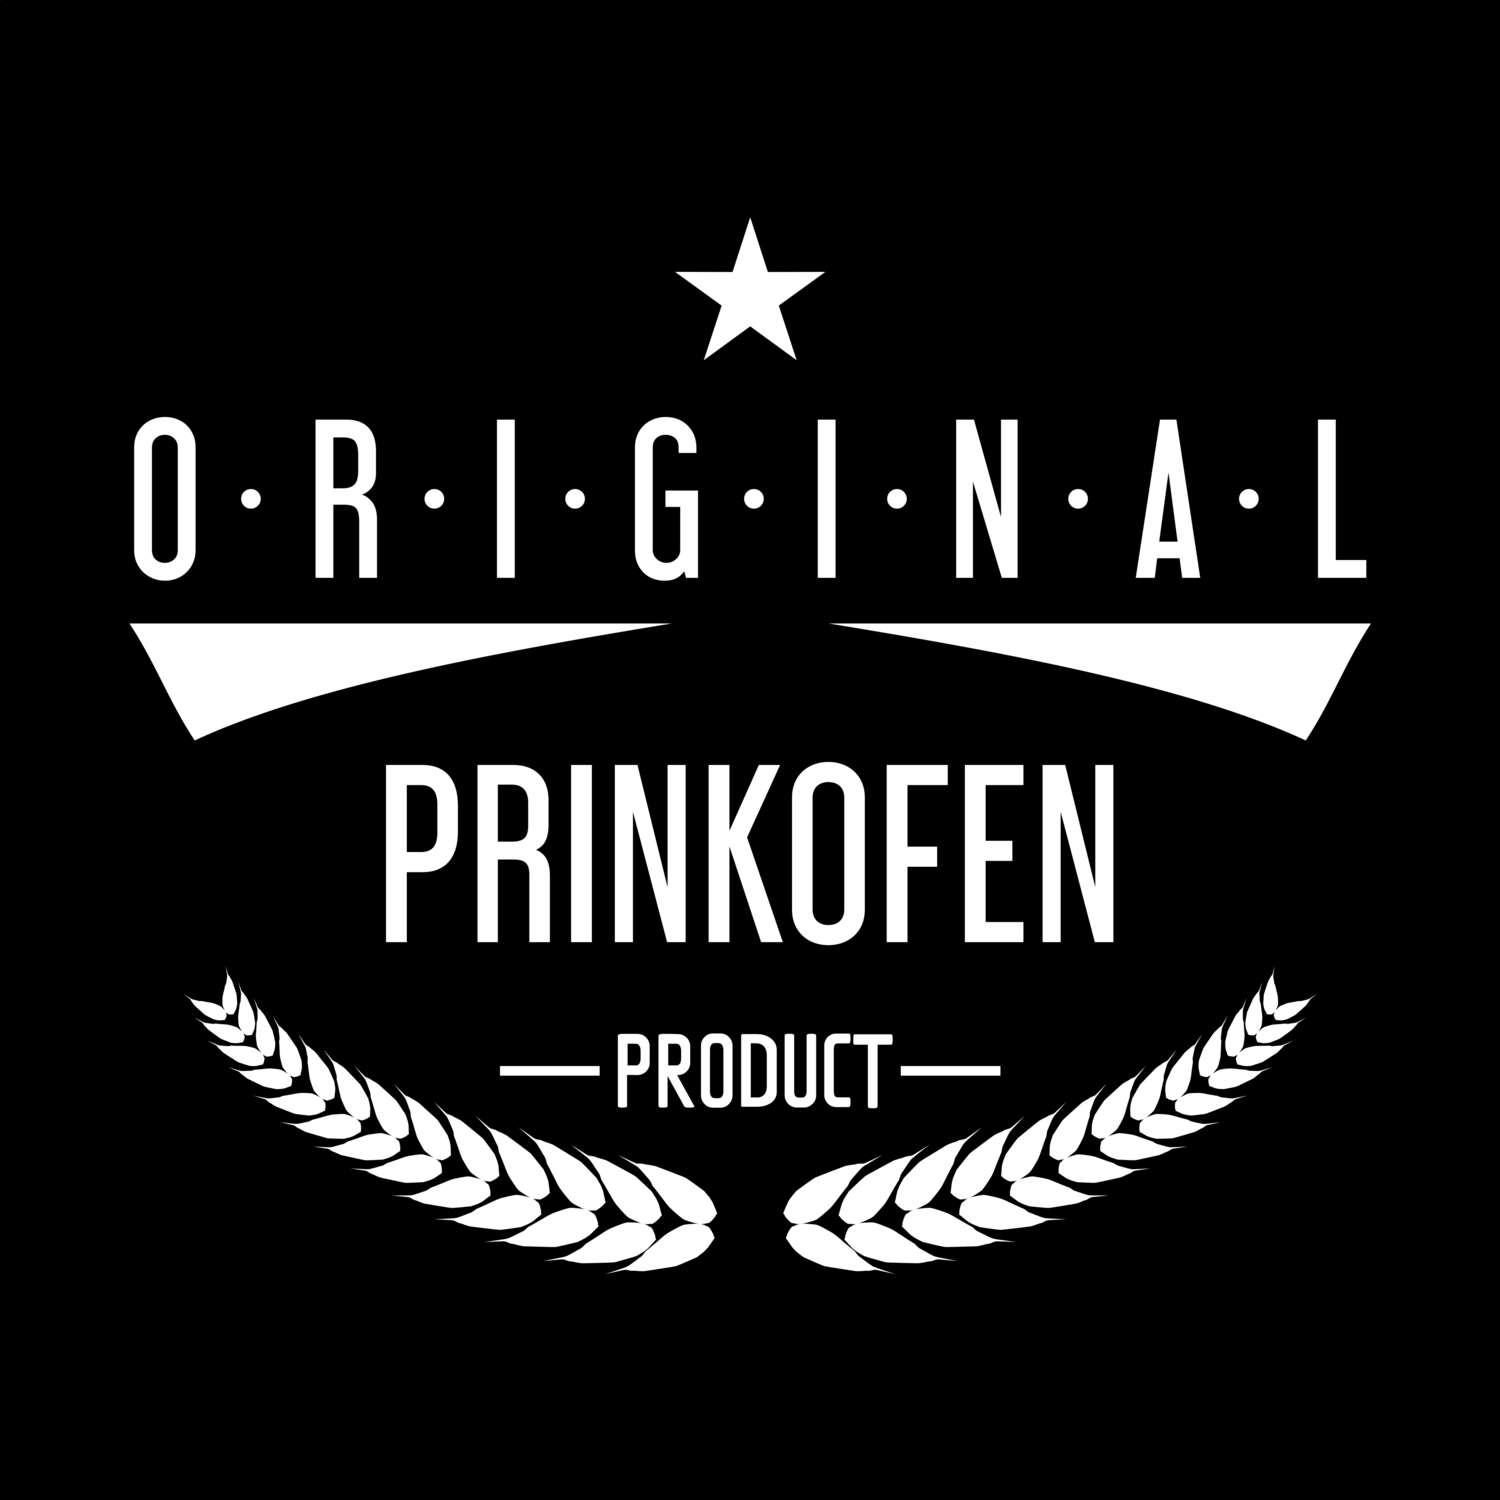 Prinkofen T-Shirt »Original Product«